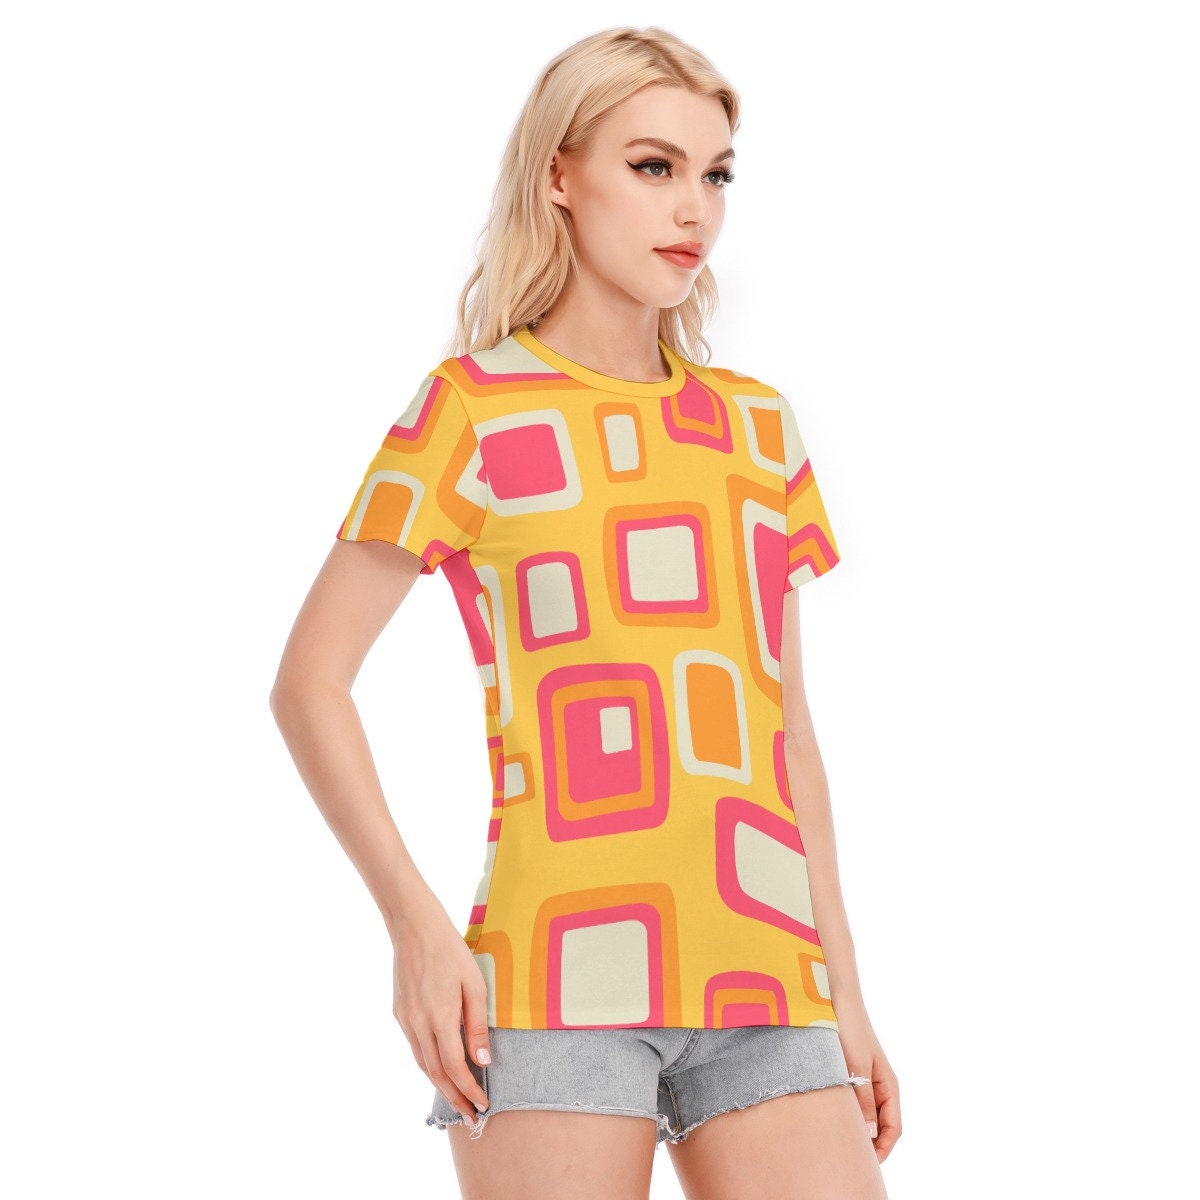 Retro T-shirt, Mod top, Womens Tshirts, 60s style top, Vintage style Tshirt, Retro Top, Womens Tops, 60s Mod Top, Yellow Mod, Geometric Top